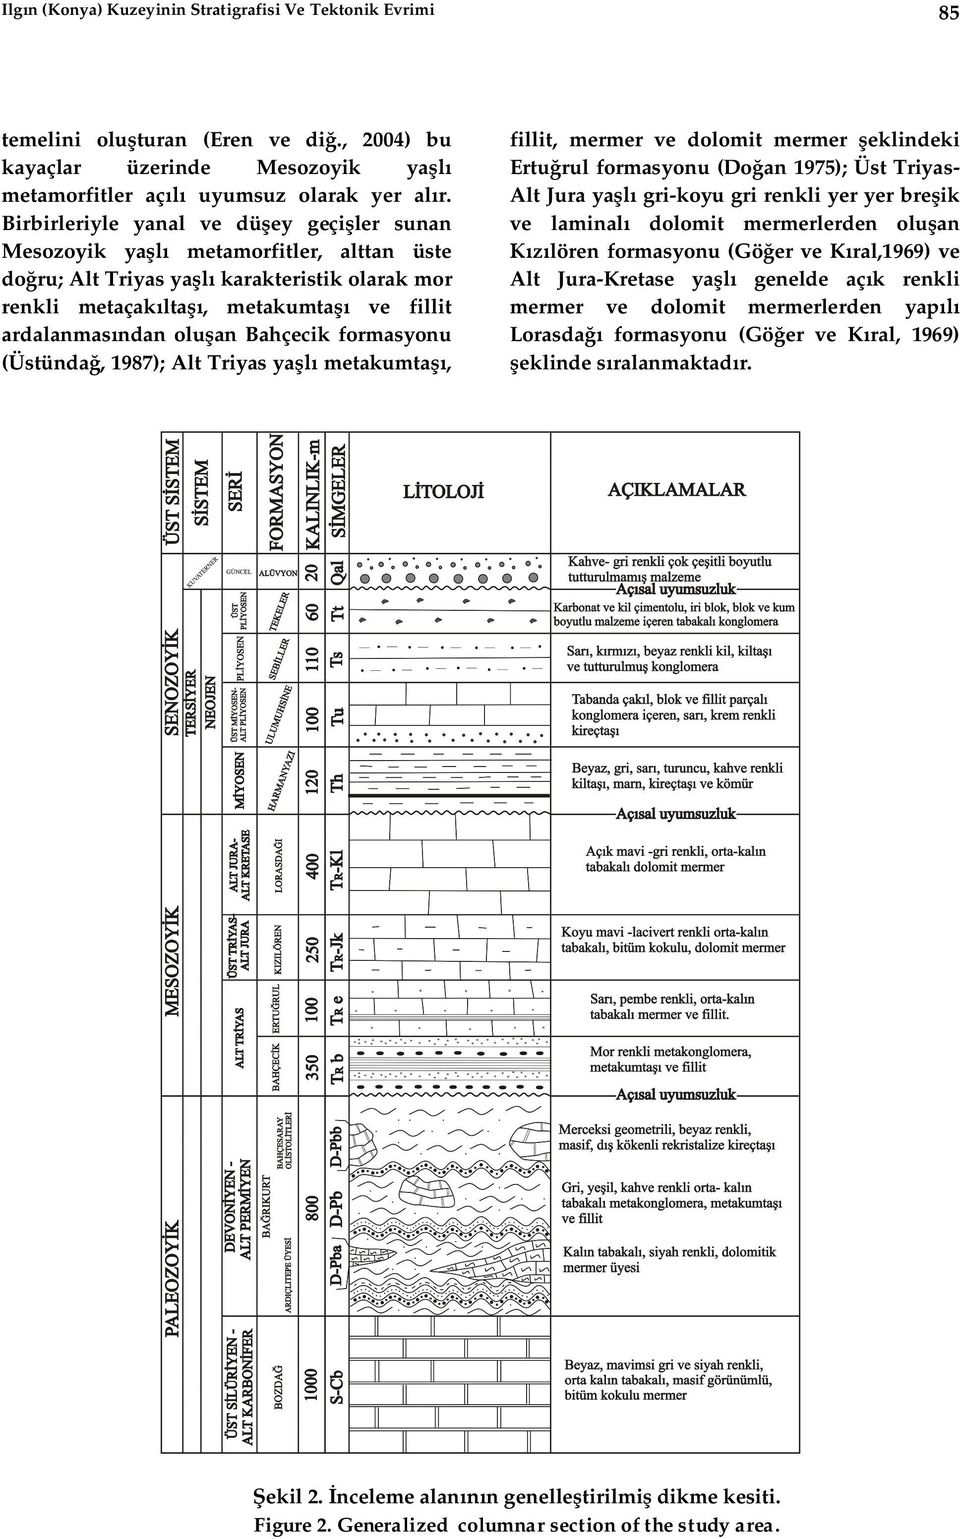 Bahçecik formasyonu (Üstünda, 1987); Alt Triyas ya metakumta, fillit, mermer ve dolomit mermer eklindeki Ertu rul formasyonu (Do an 1975); Üst Triyas- Alt Jura ya gri-koyu gri renkli yer yer bre ik